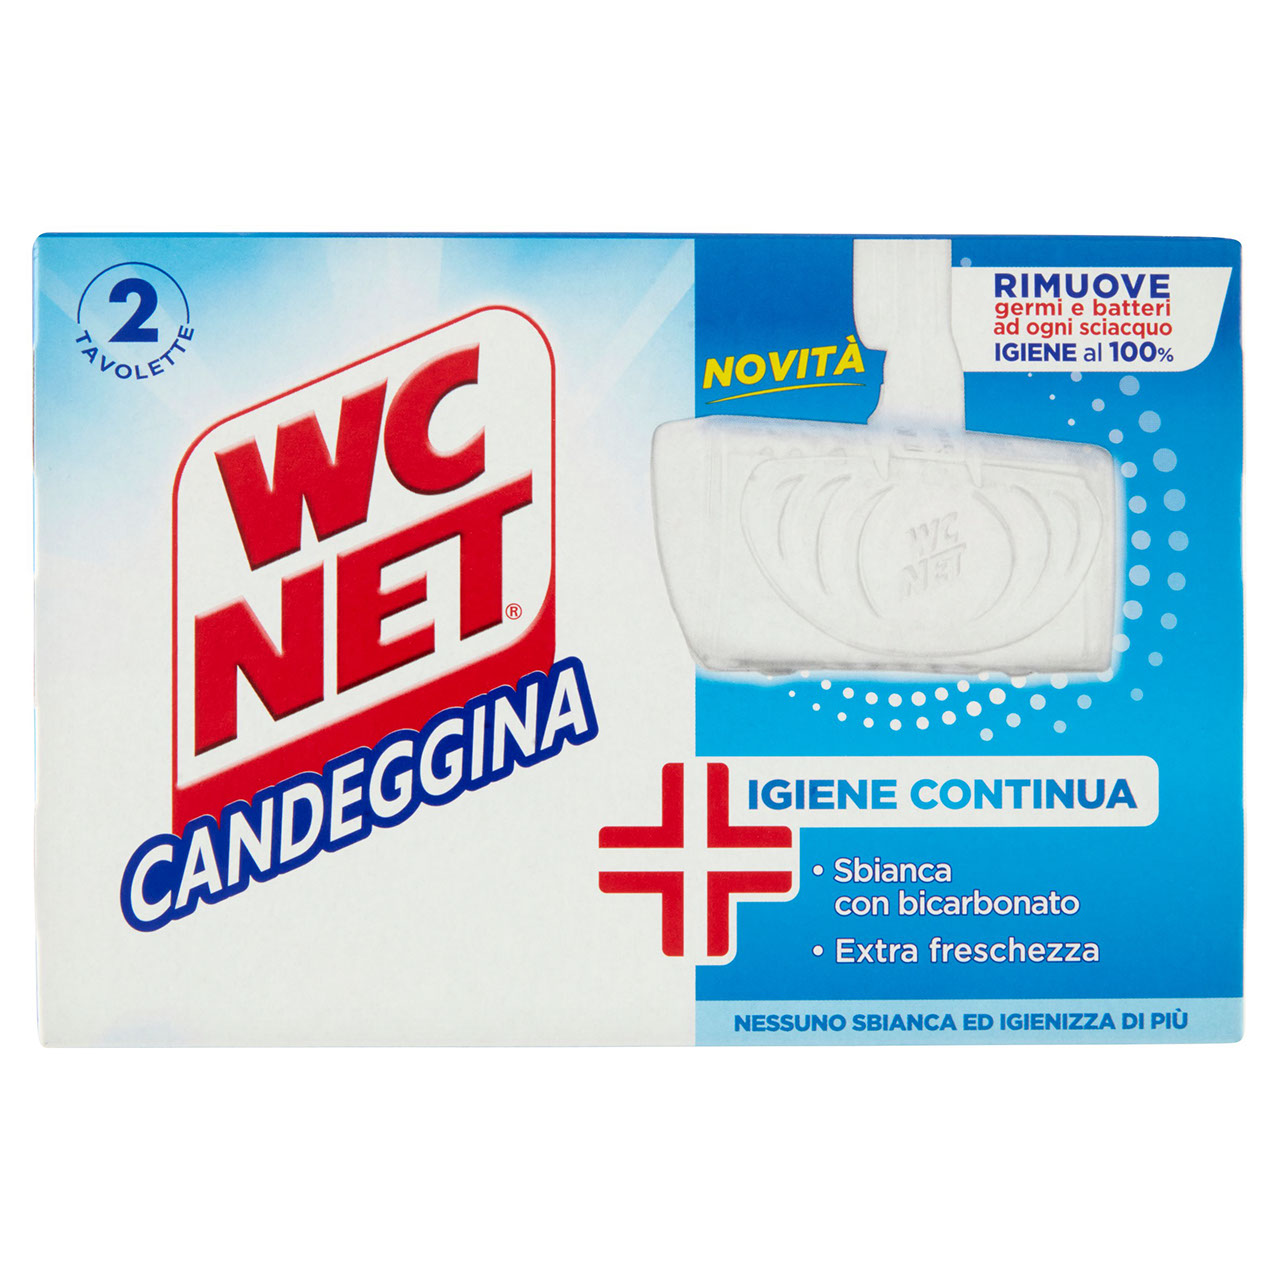 WC Net Tavoletta Candeggina per WC in vendita online